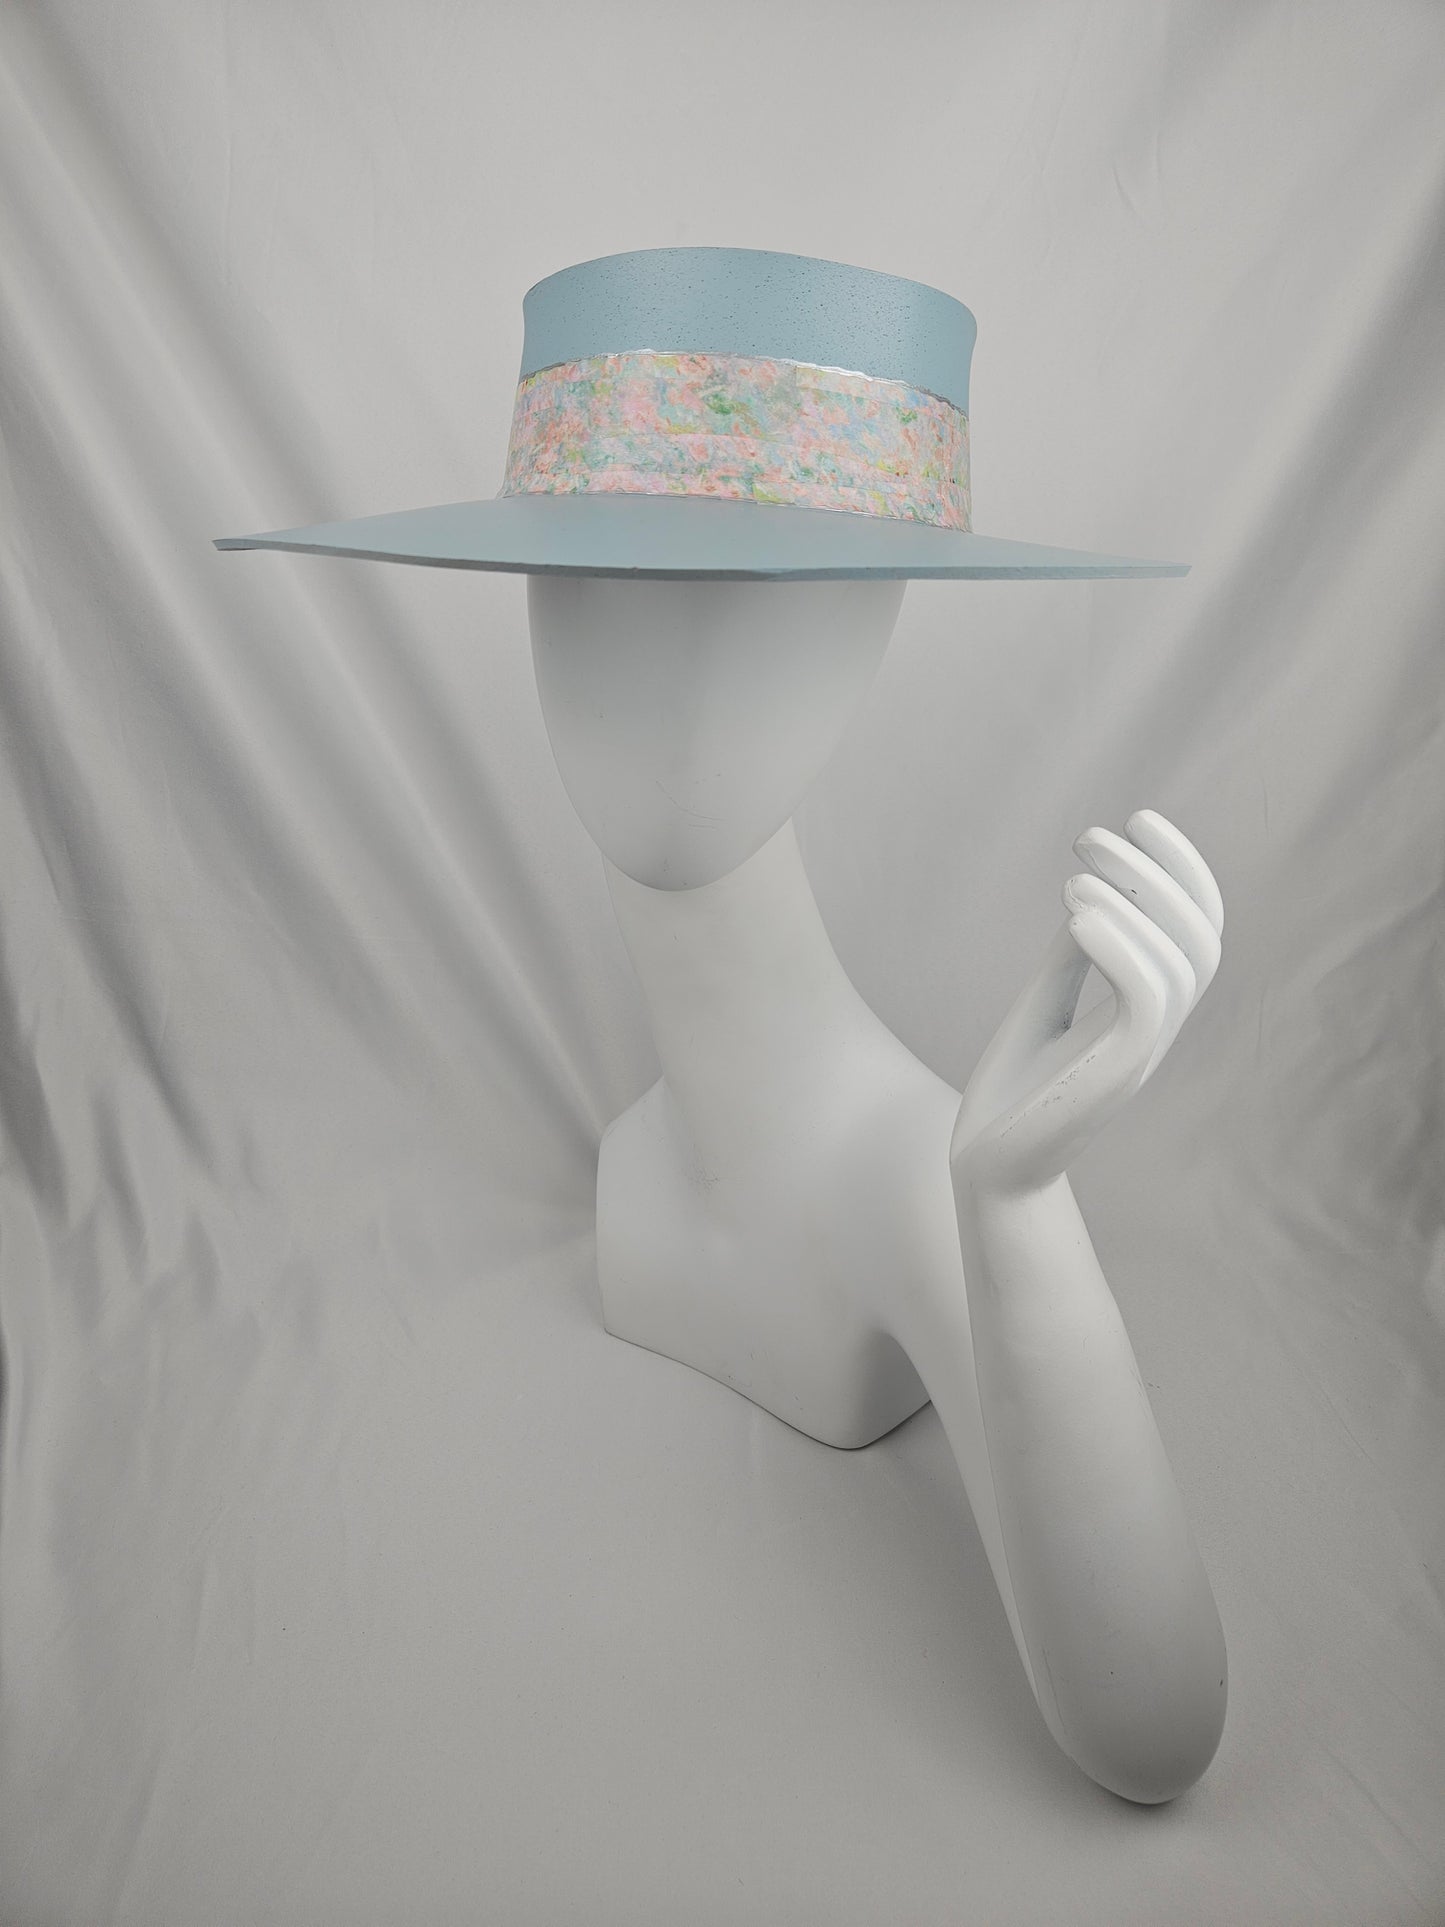 Tall Soft Blue Audrey Foam Sun Visor Hat with Pastel Floral Band: 1950s, Walks, Brunch, Asian, Golf, Easter, Church, No Headache, Derby